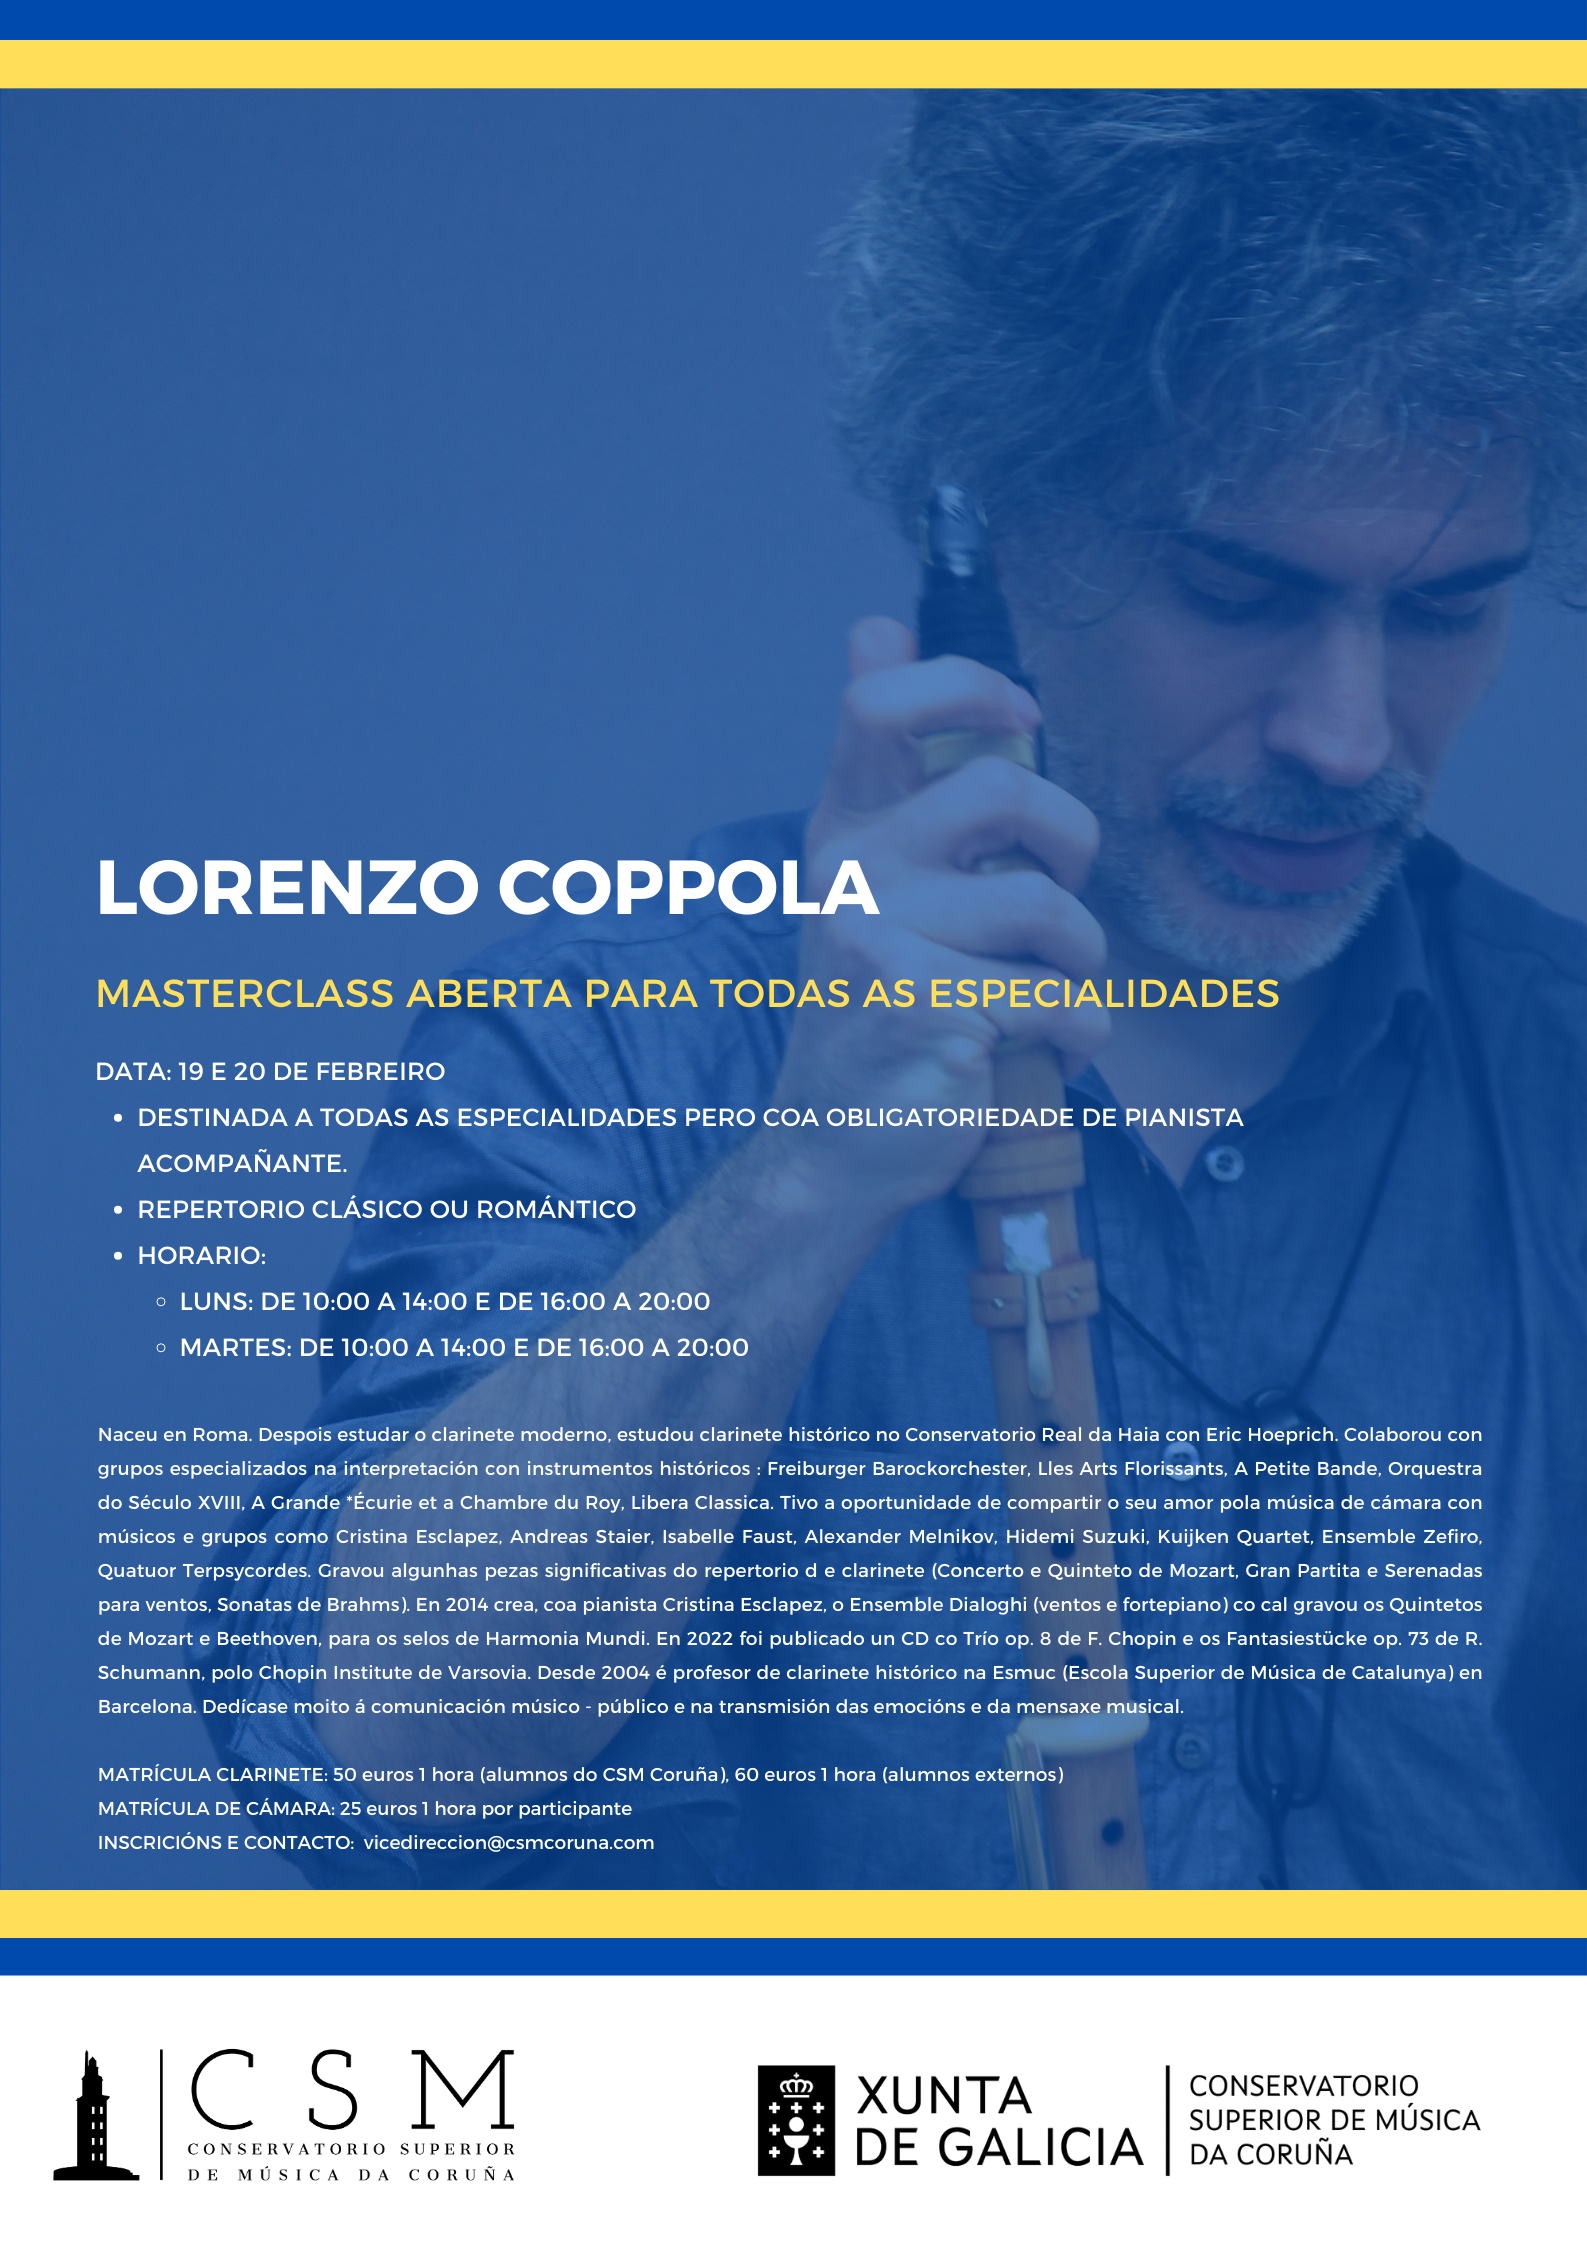 MASTERCLASS DE LORENZO COPPOLA